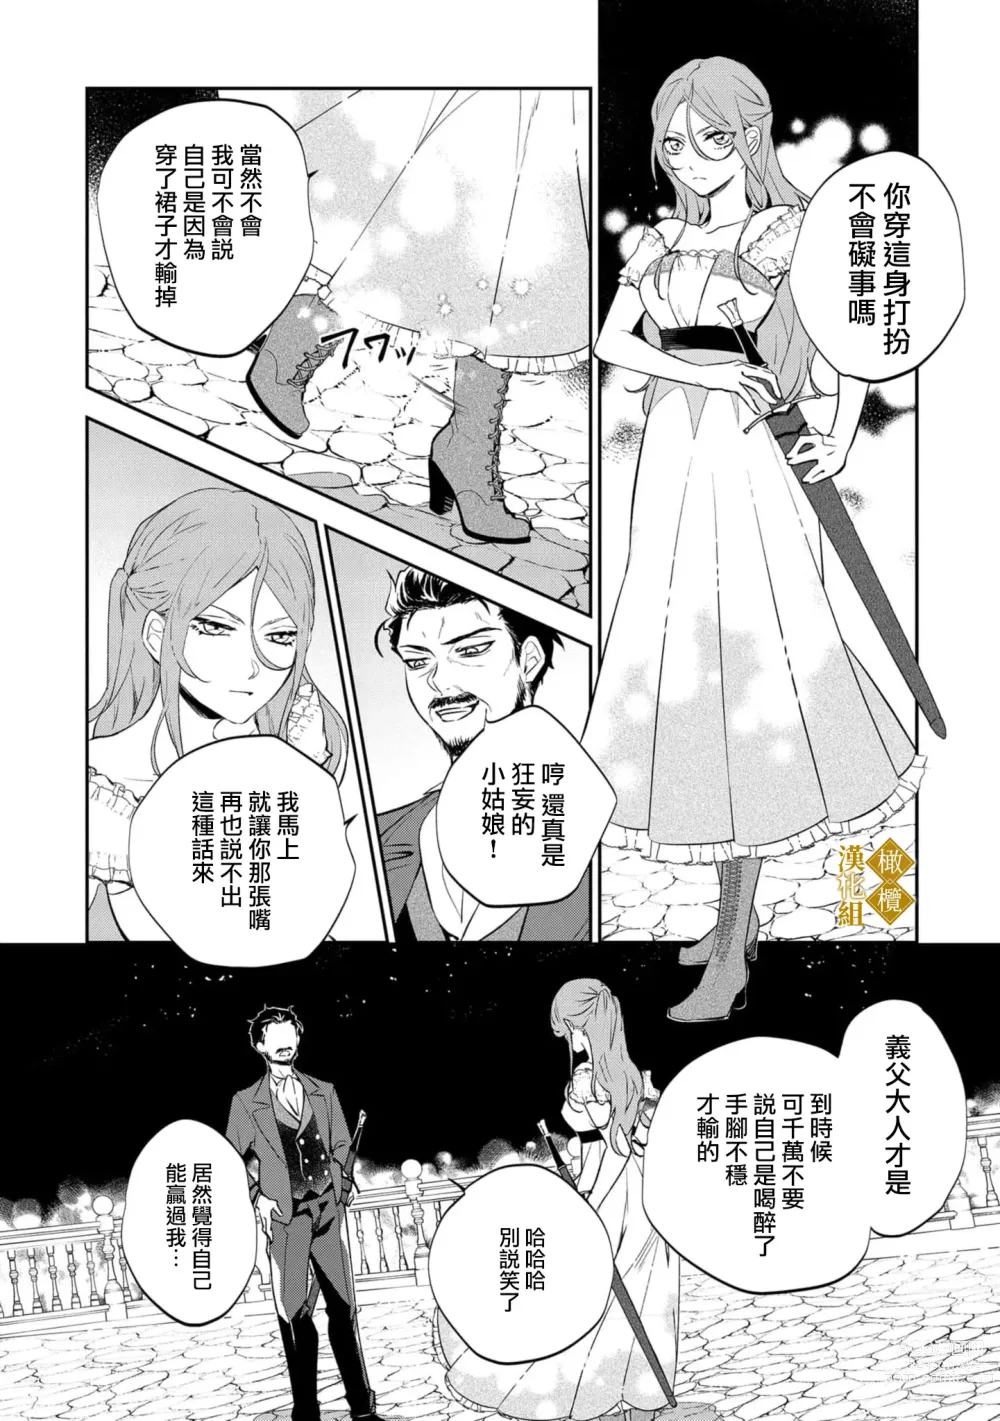 Page 24 of manga haikei misi ranu danna sama、 rikon si te itadaki masu~01｜敬启者素未谋面的丈夫、请和我离婚~01话